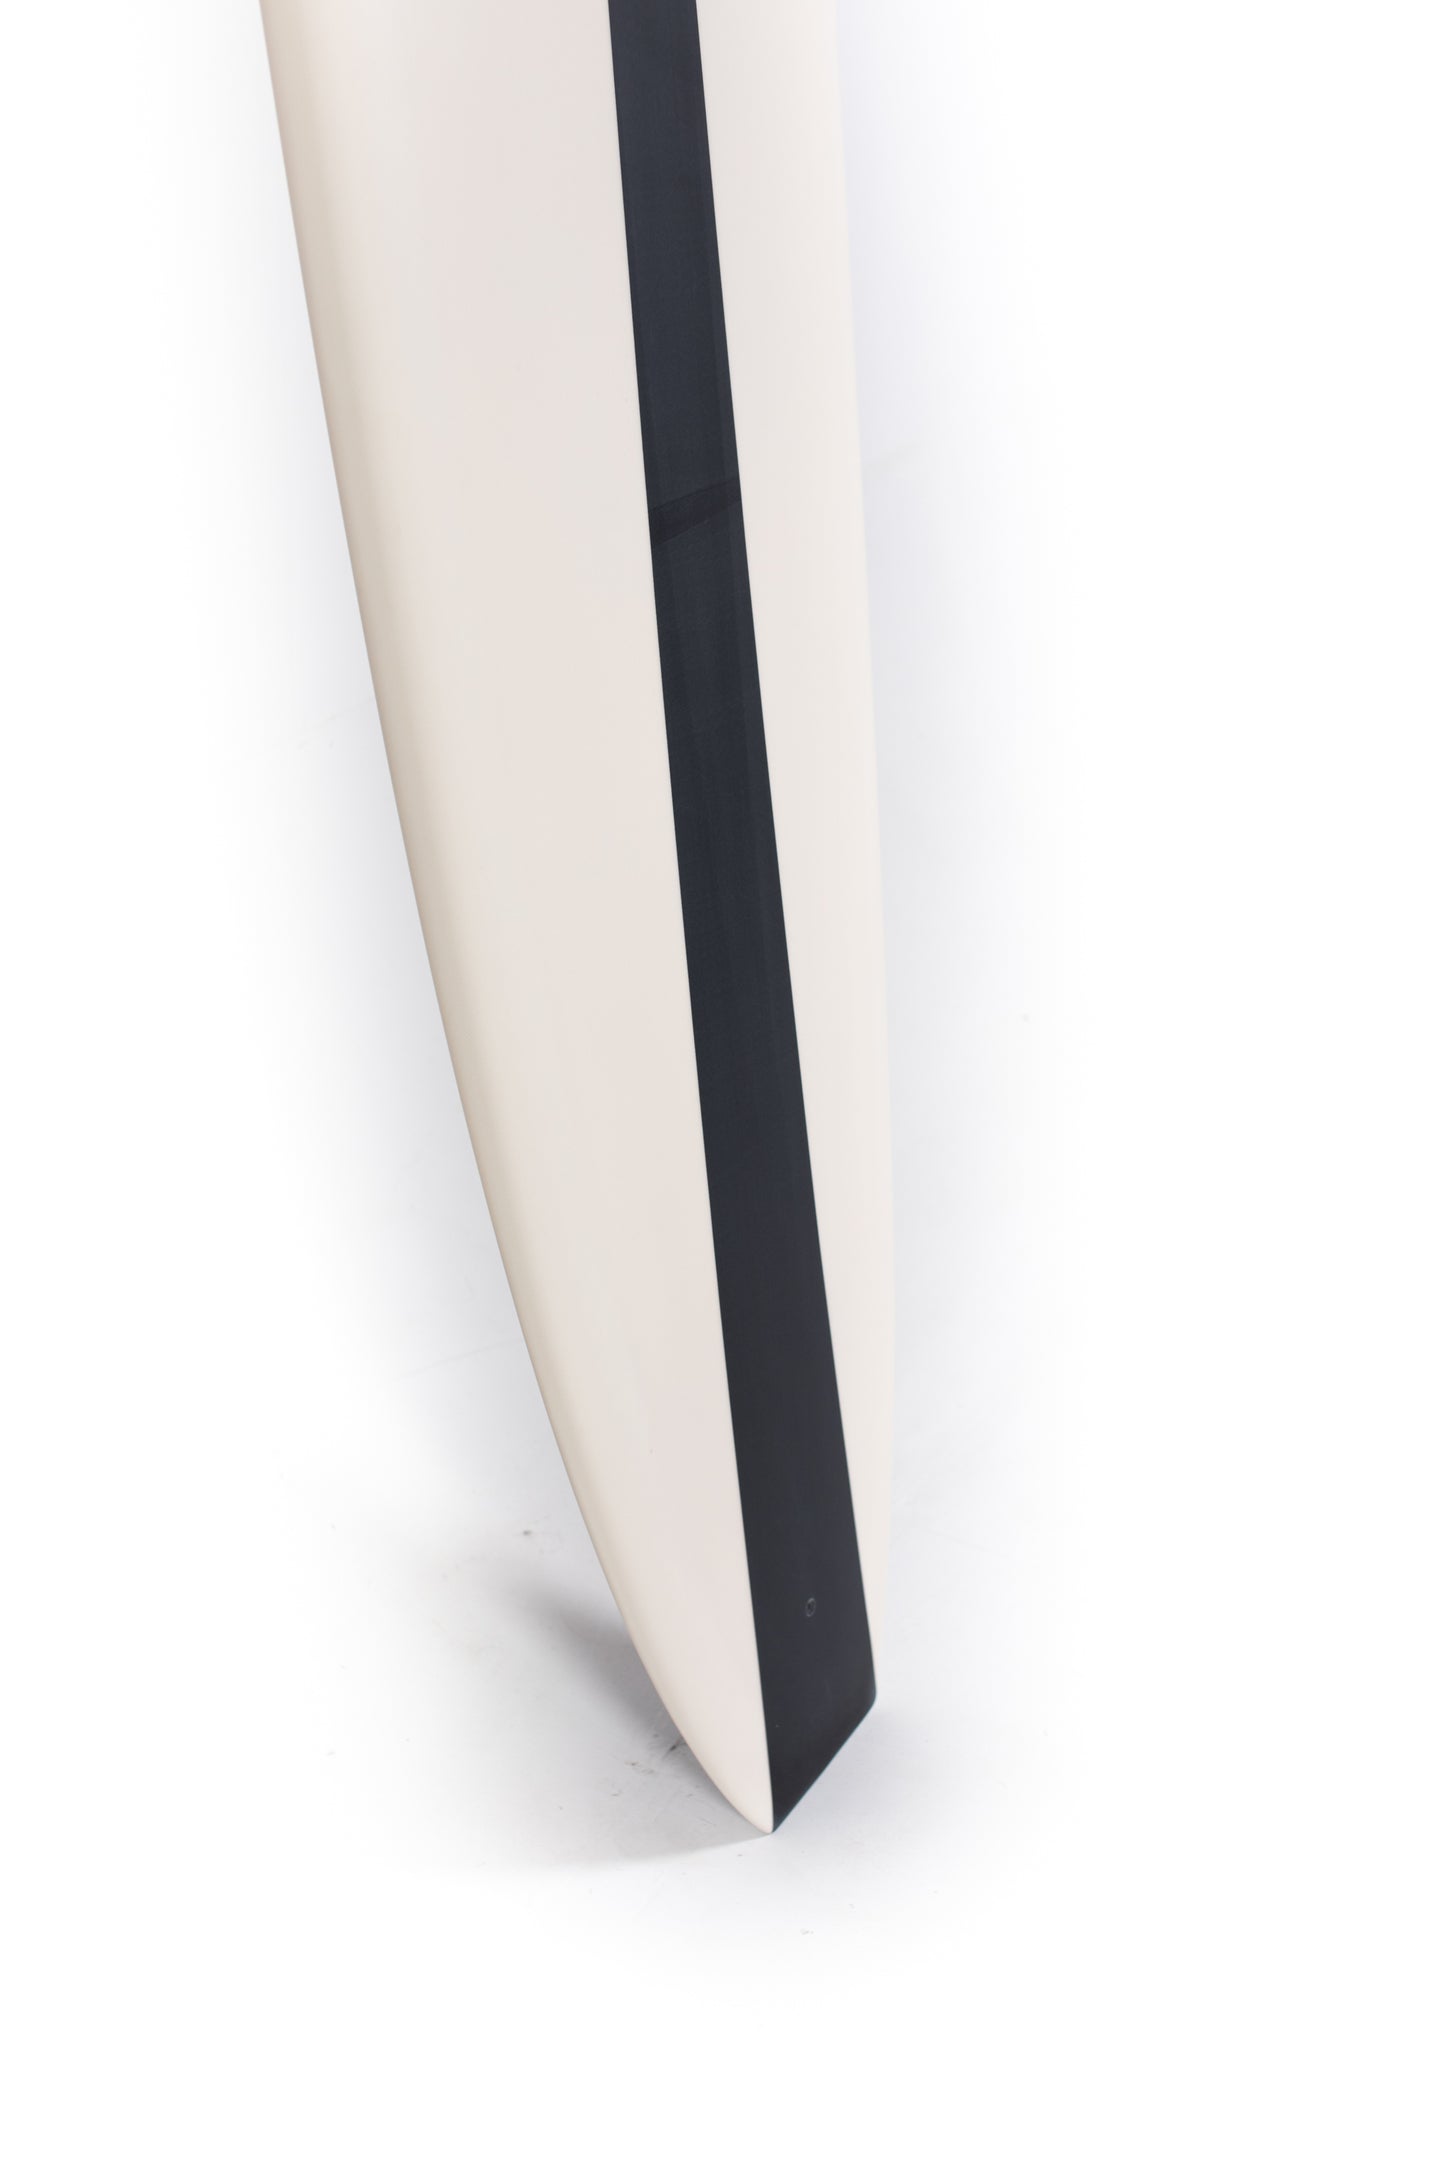 
                  
                    Pukas Surf Shop - Christenson Surfboard  - TRADESMAN by Chris Christenson - 9'6” x 23 1/4 x 2 7/8 - CX05455
                  
                